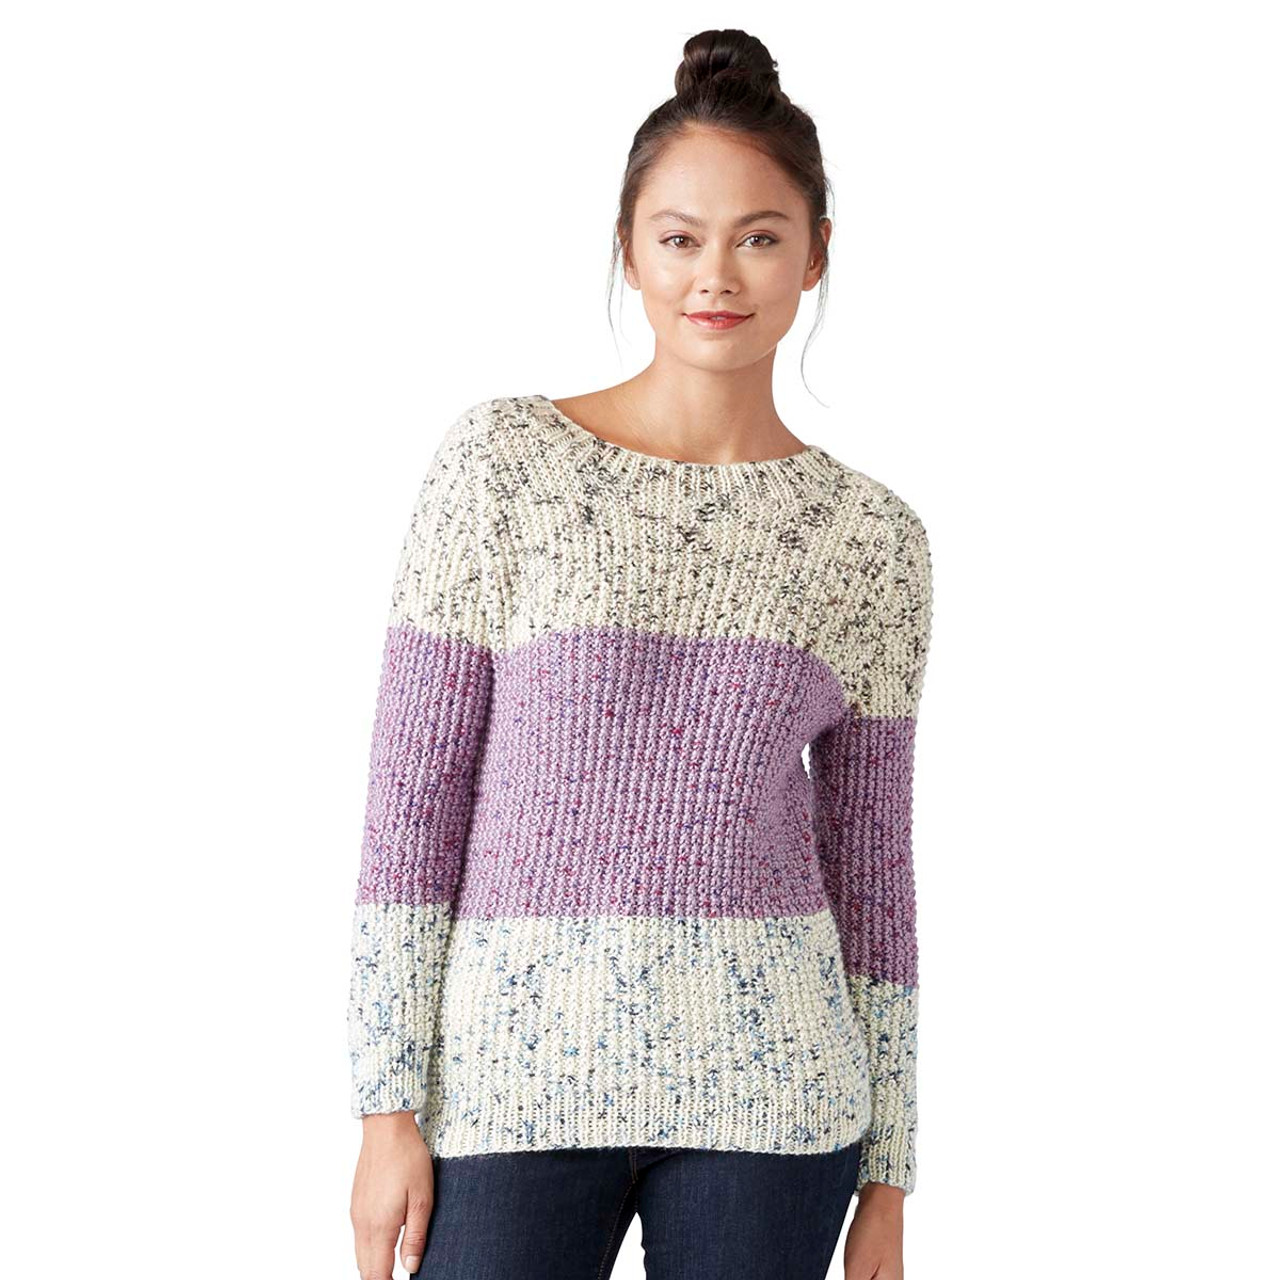 Caron Speckles Knit Sweater Yarn Kit